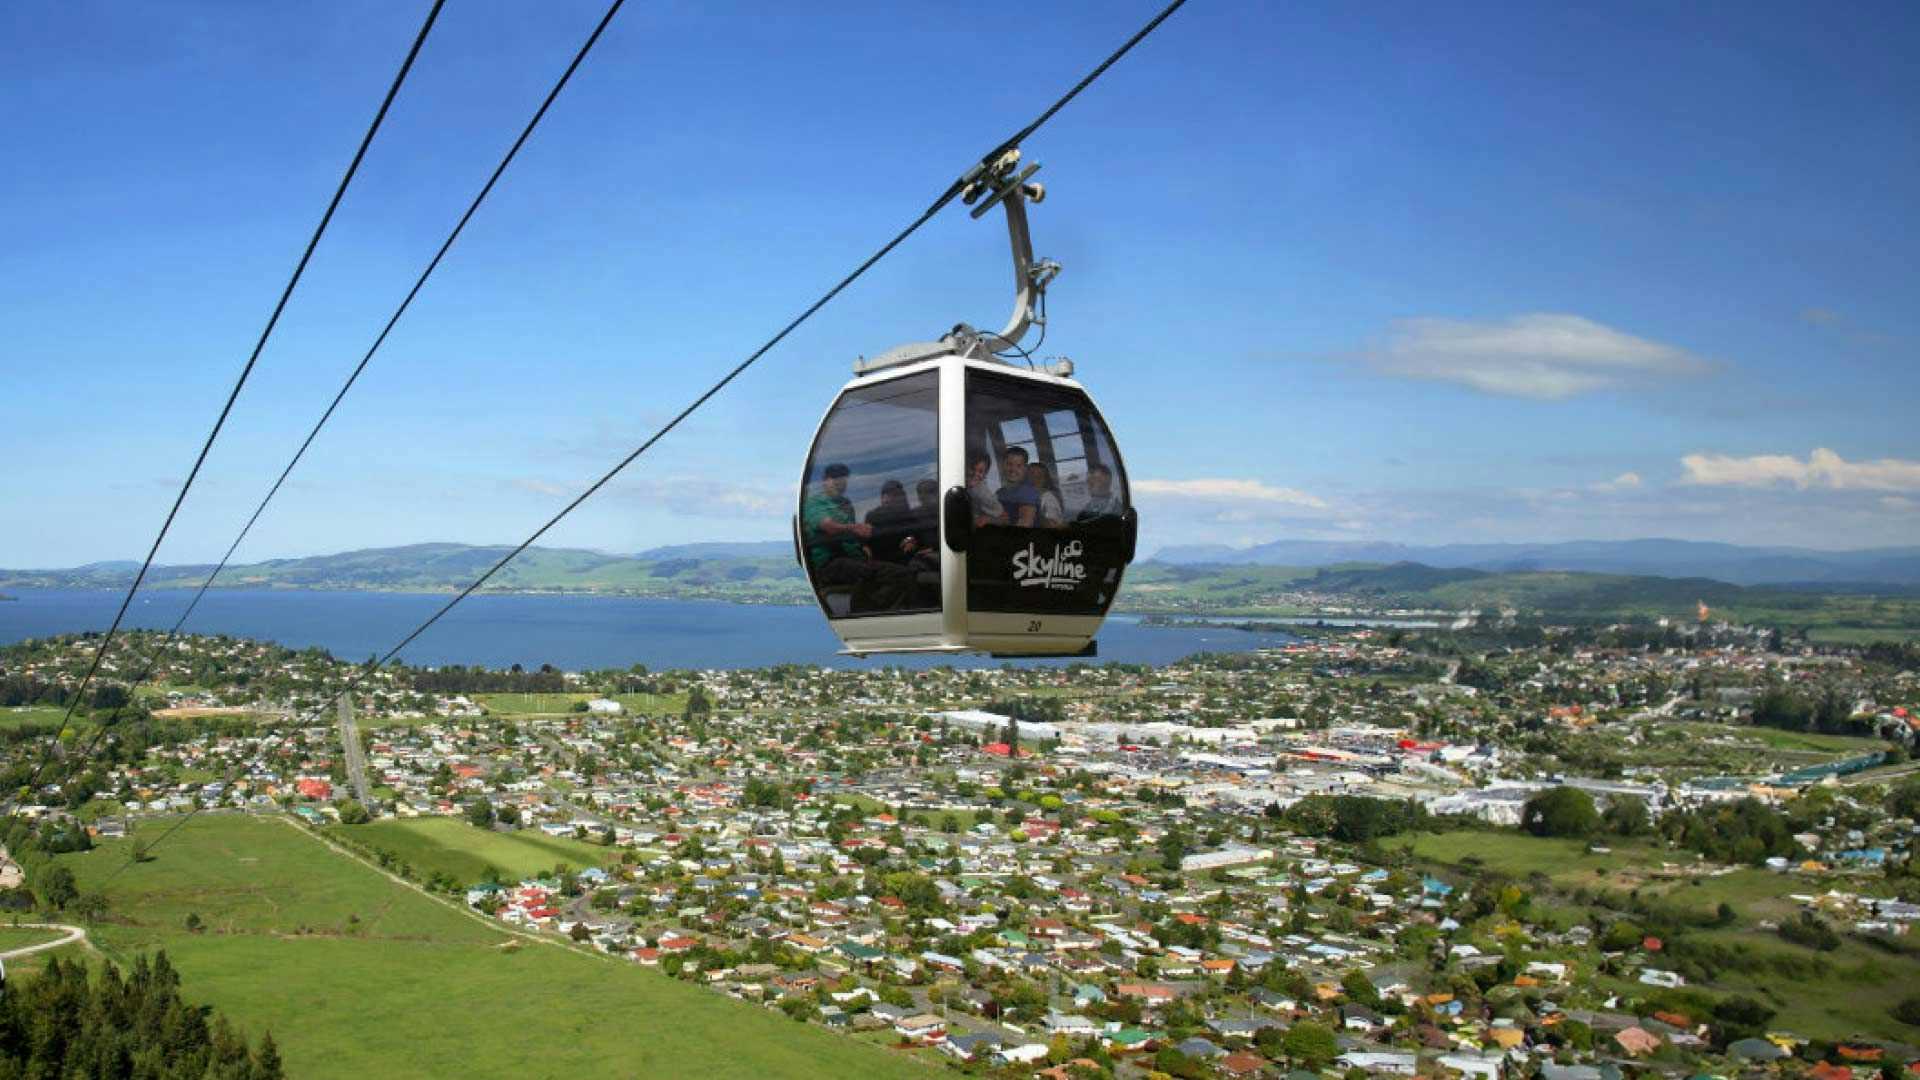 The Skyline Gondola in Rotorua